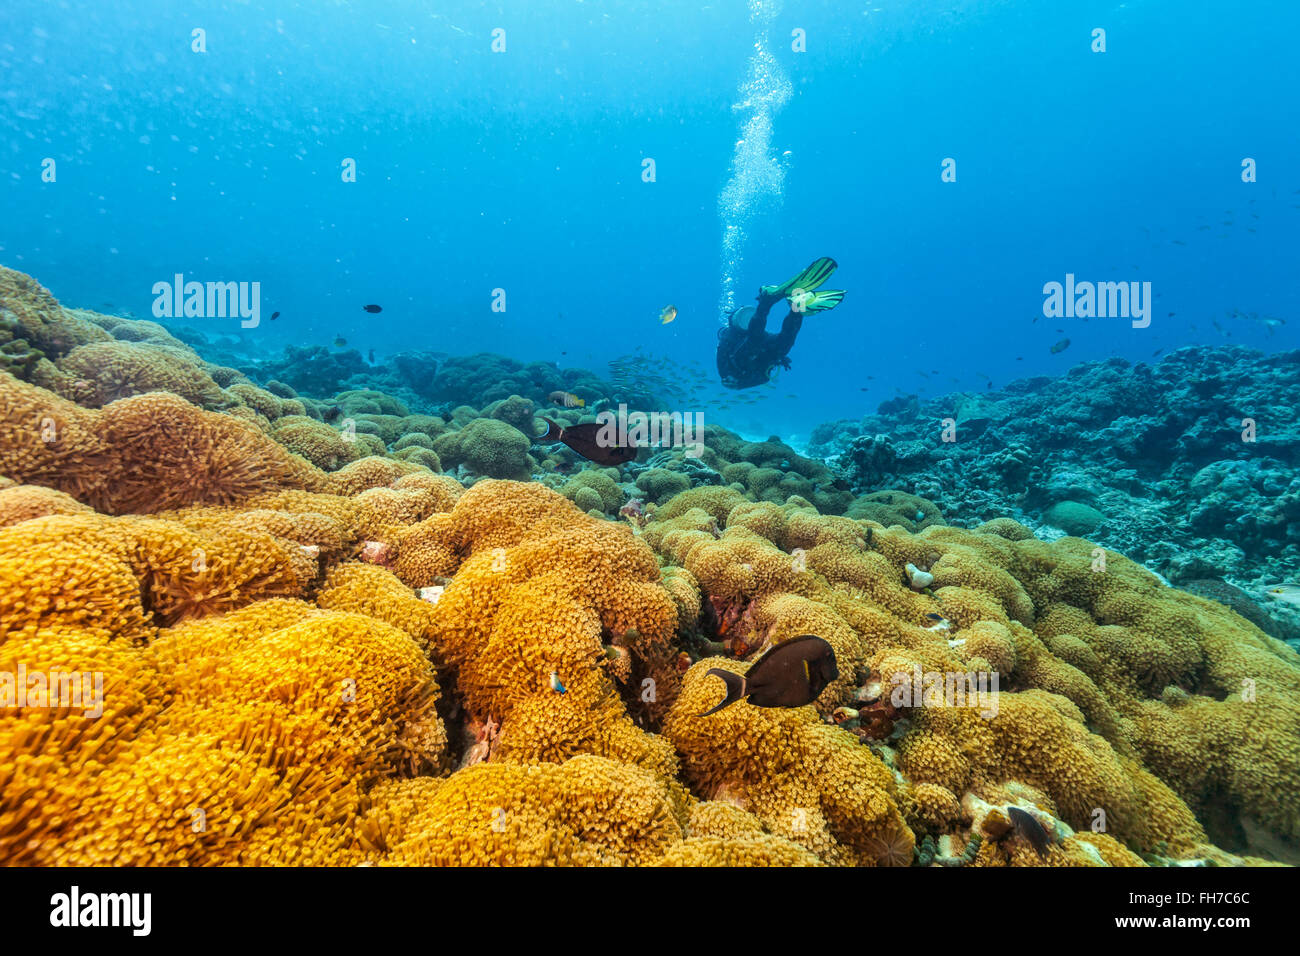 Scuba diver underwater examine closely corals Stock Photo